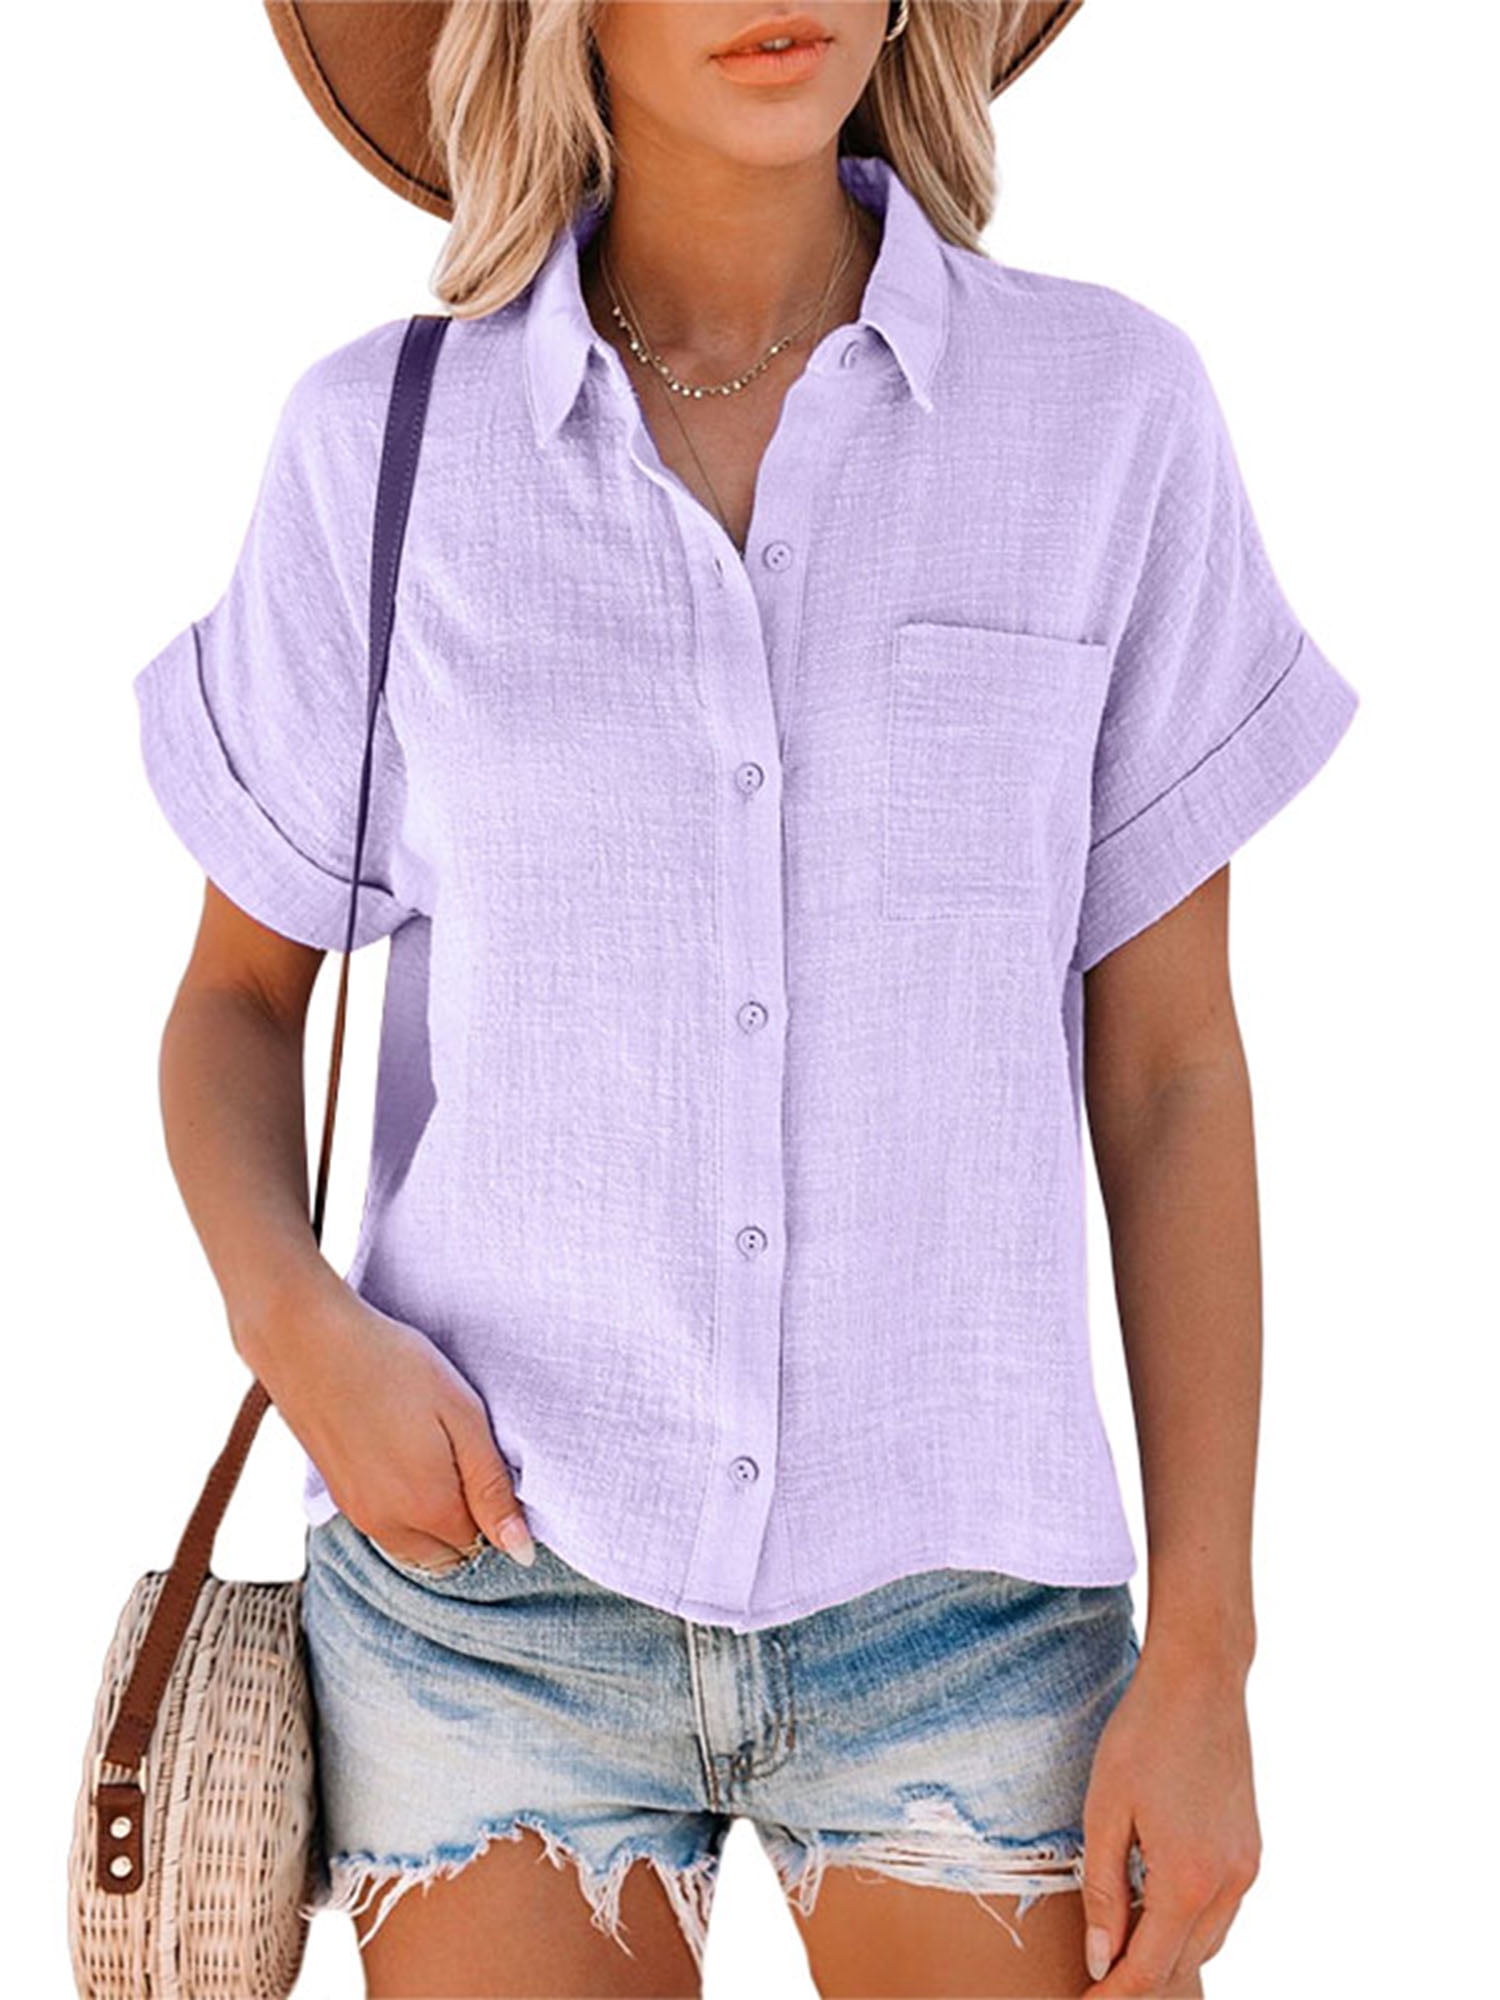 Women's Short Sleeve Button Down Blouse Lapel Shirt Summer Casual Tee Tops Solid